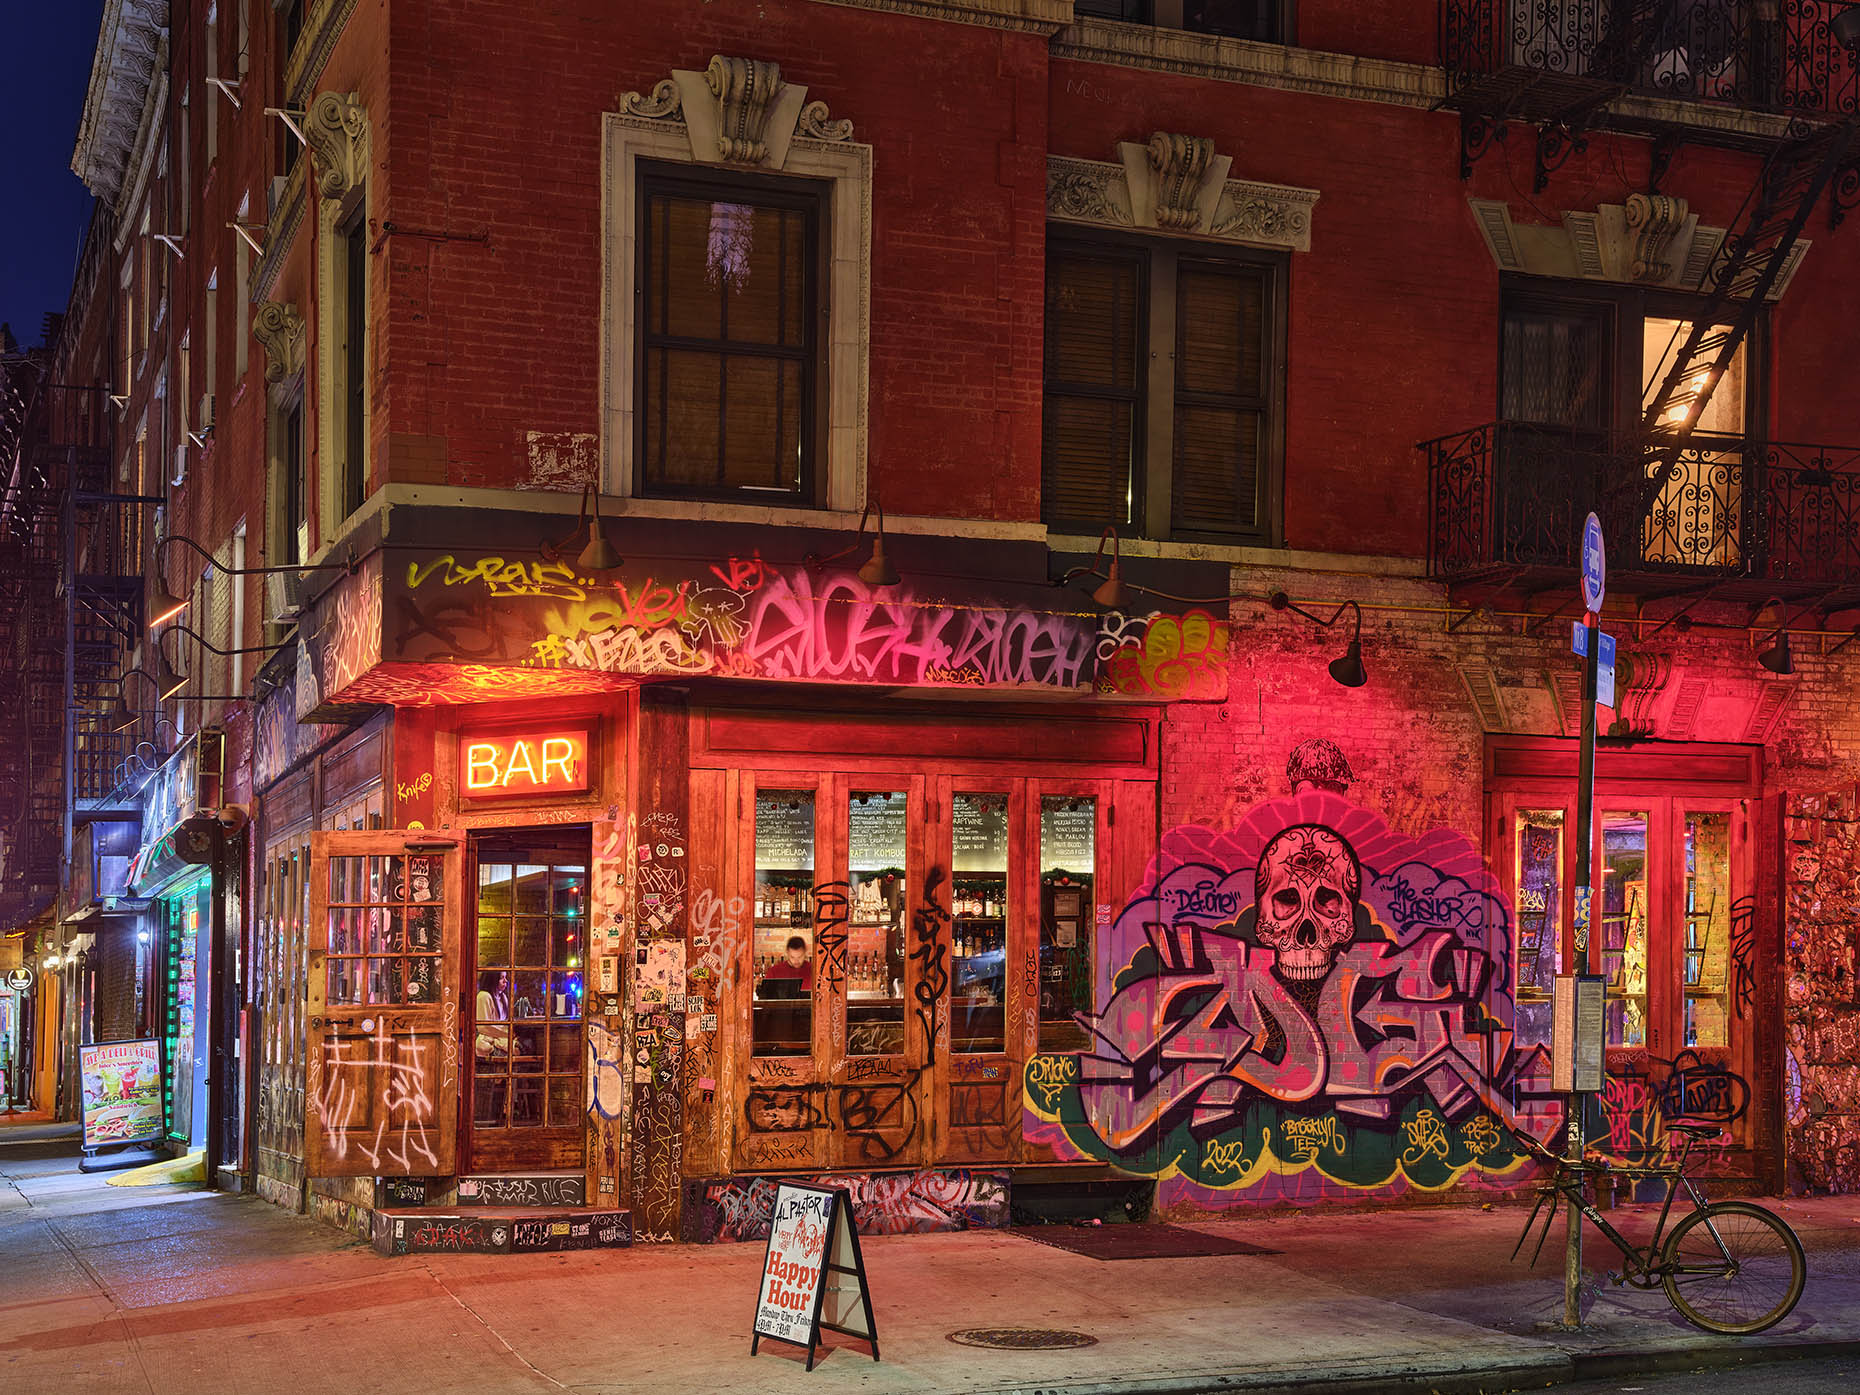 Bar, Lower East Side